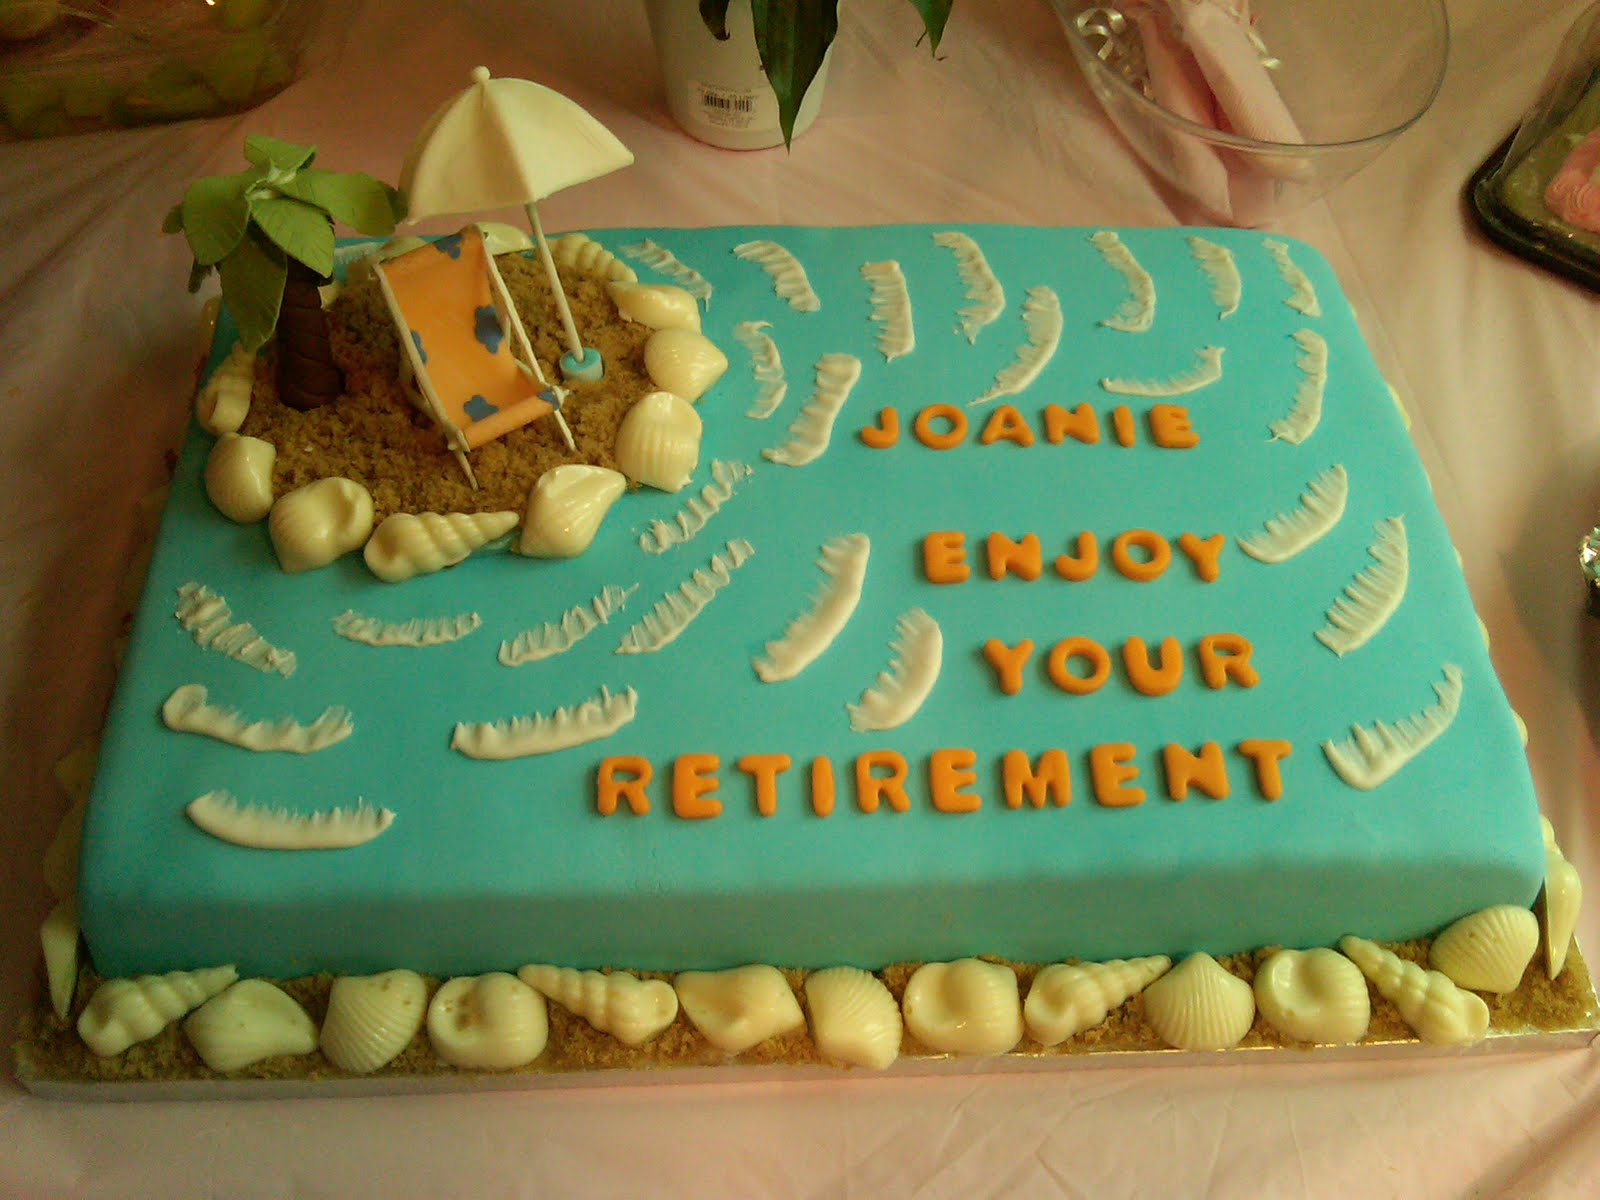  Retirement  Cake  Decorating  Ideas  myideasbedroom com